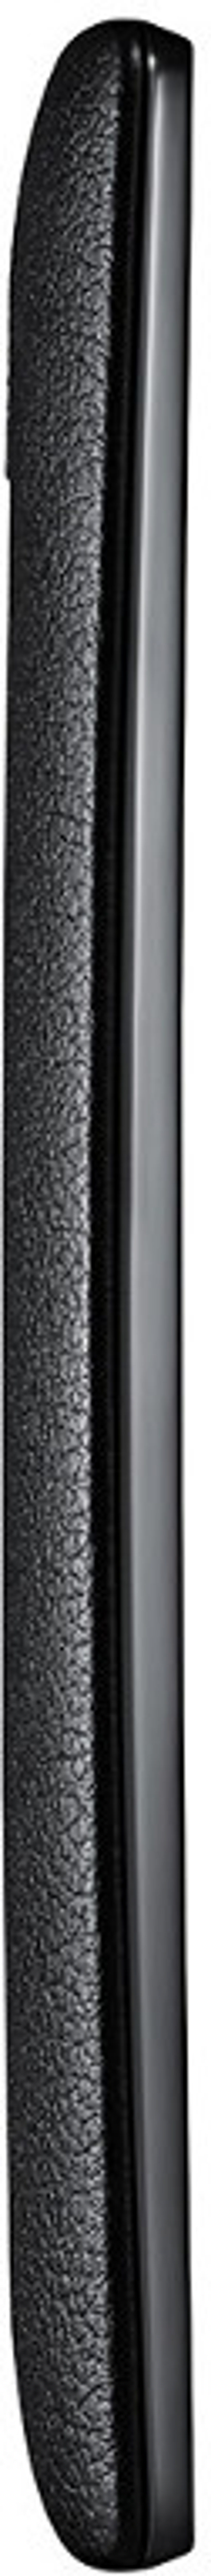 LG G4 32GB LEATHER VERSION GB BLACK Schwarz 32